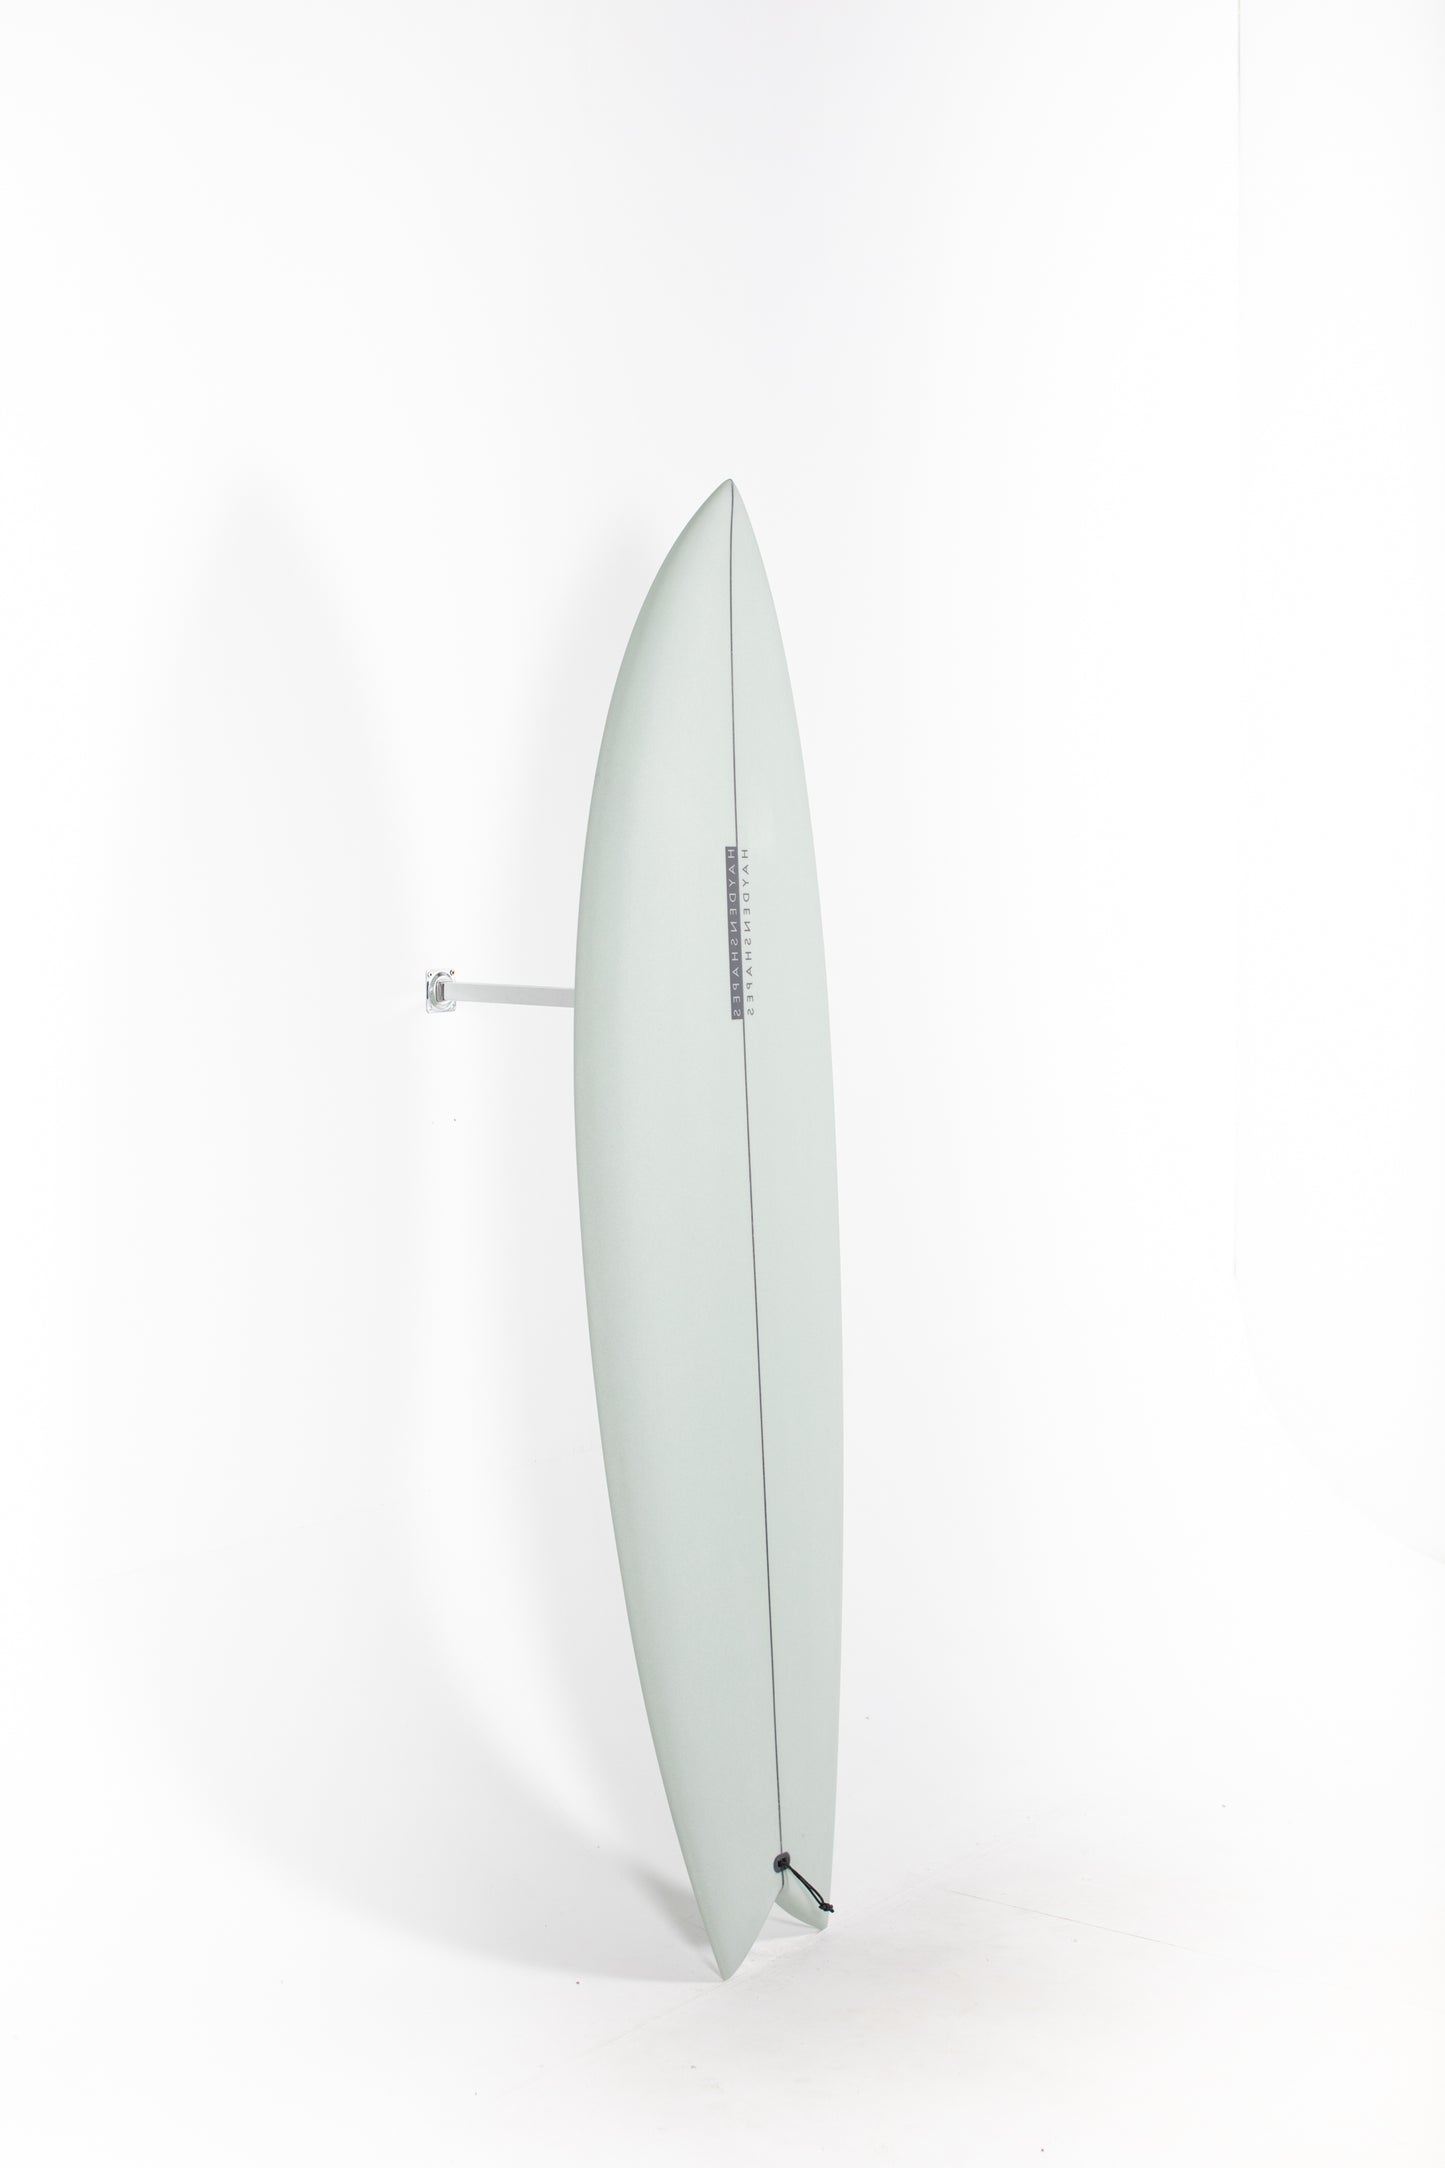 
                  
                    HaydenShapes Surfboard - HYPTO KRYPTO TWIN PU - 6'4" X 21" X 3" - 43.52L
                  
                